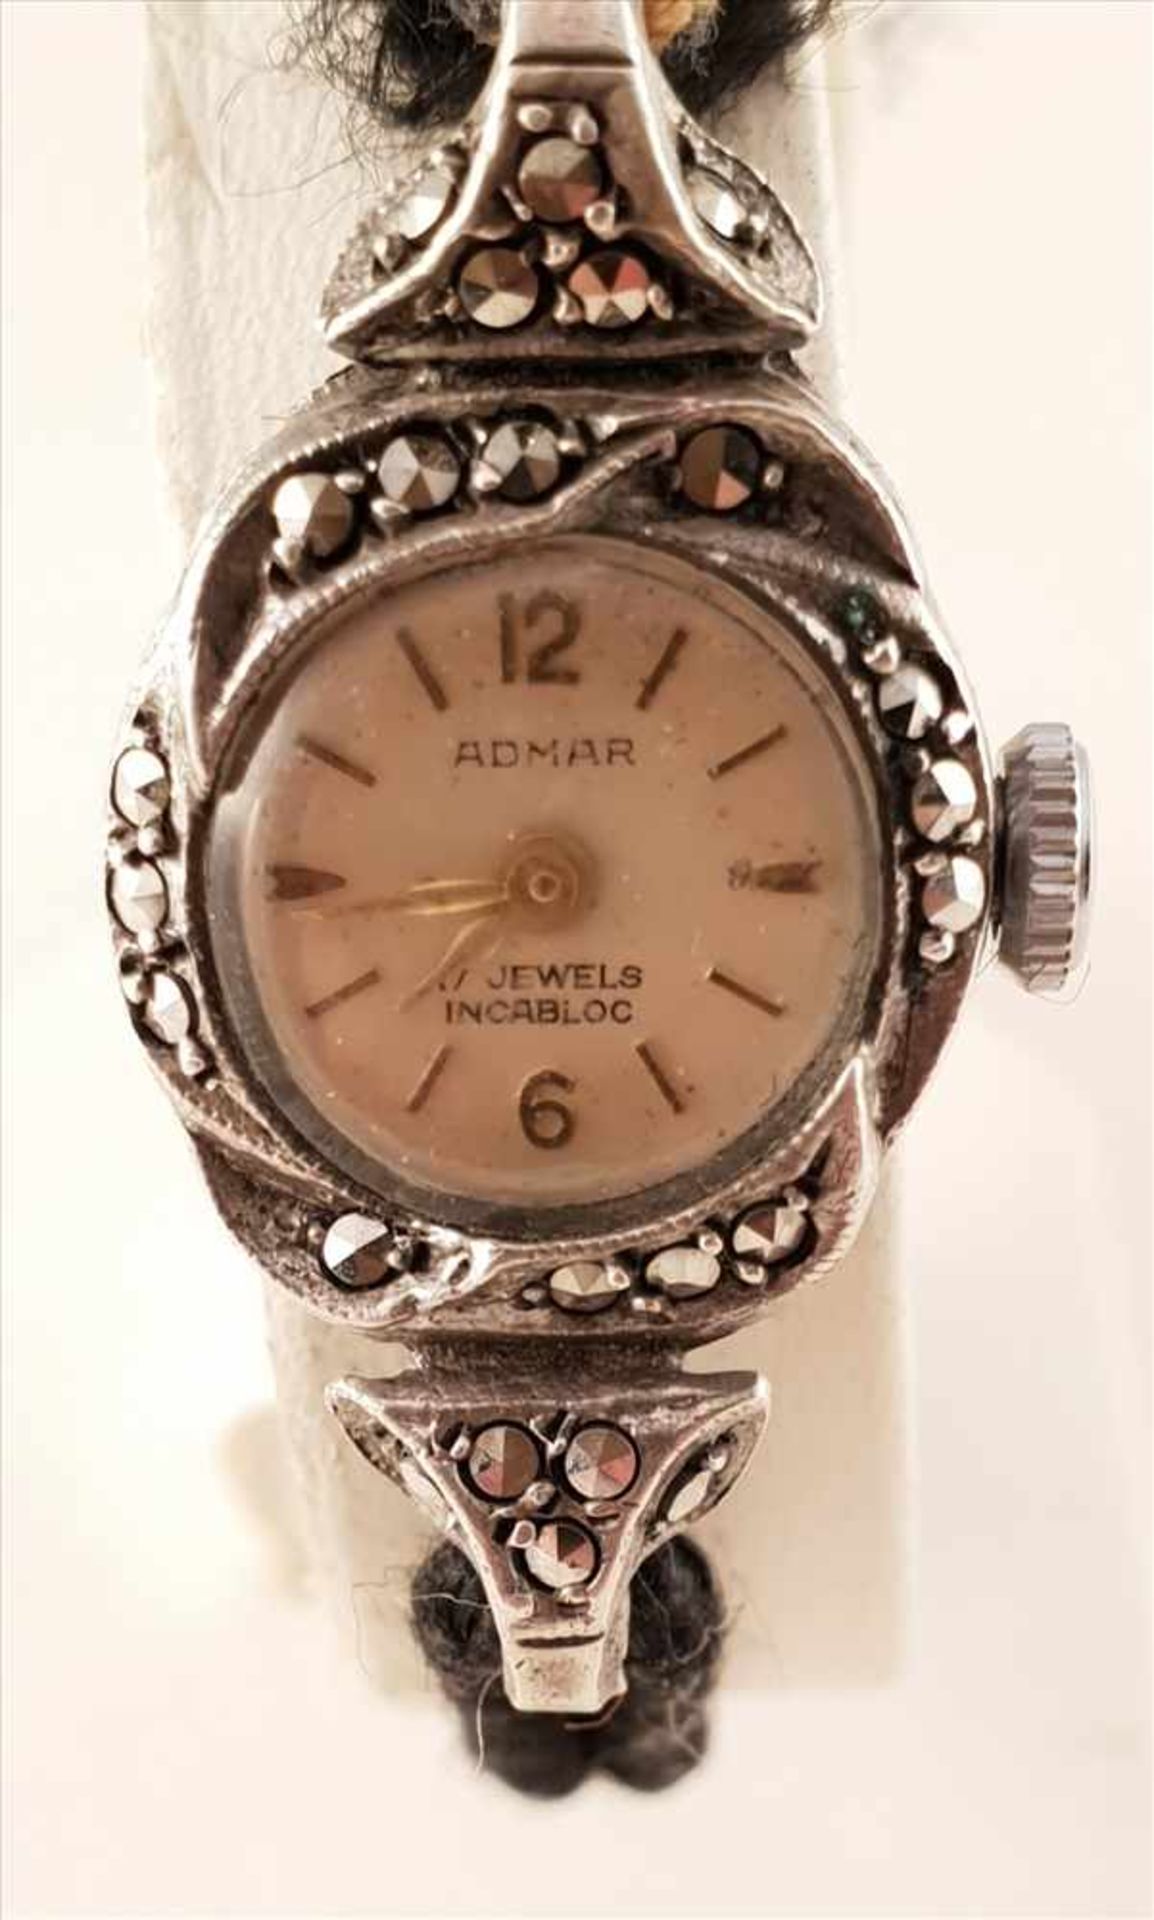 Art Deco Damenarmbanduhr , Silber 800, mechanisch Handaufzug, Marke: Admar, 17jewels , gefasst mit